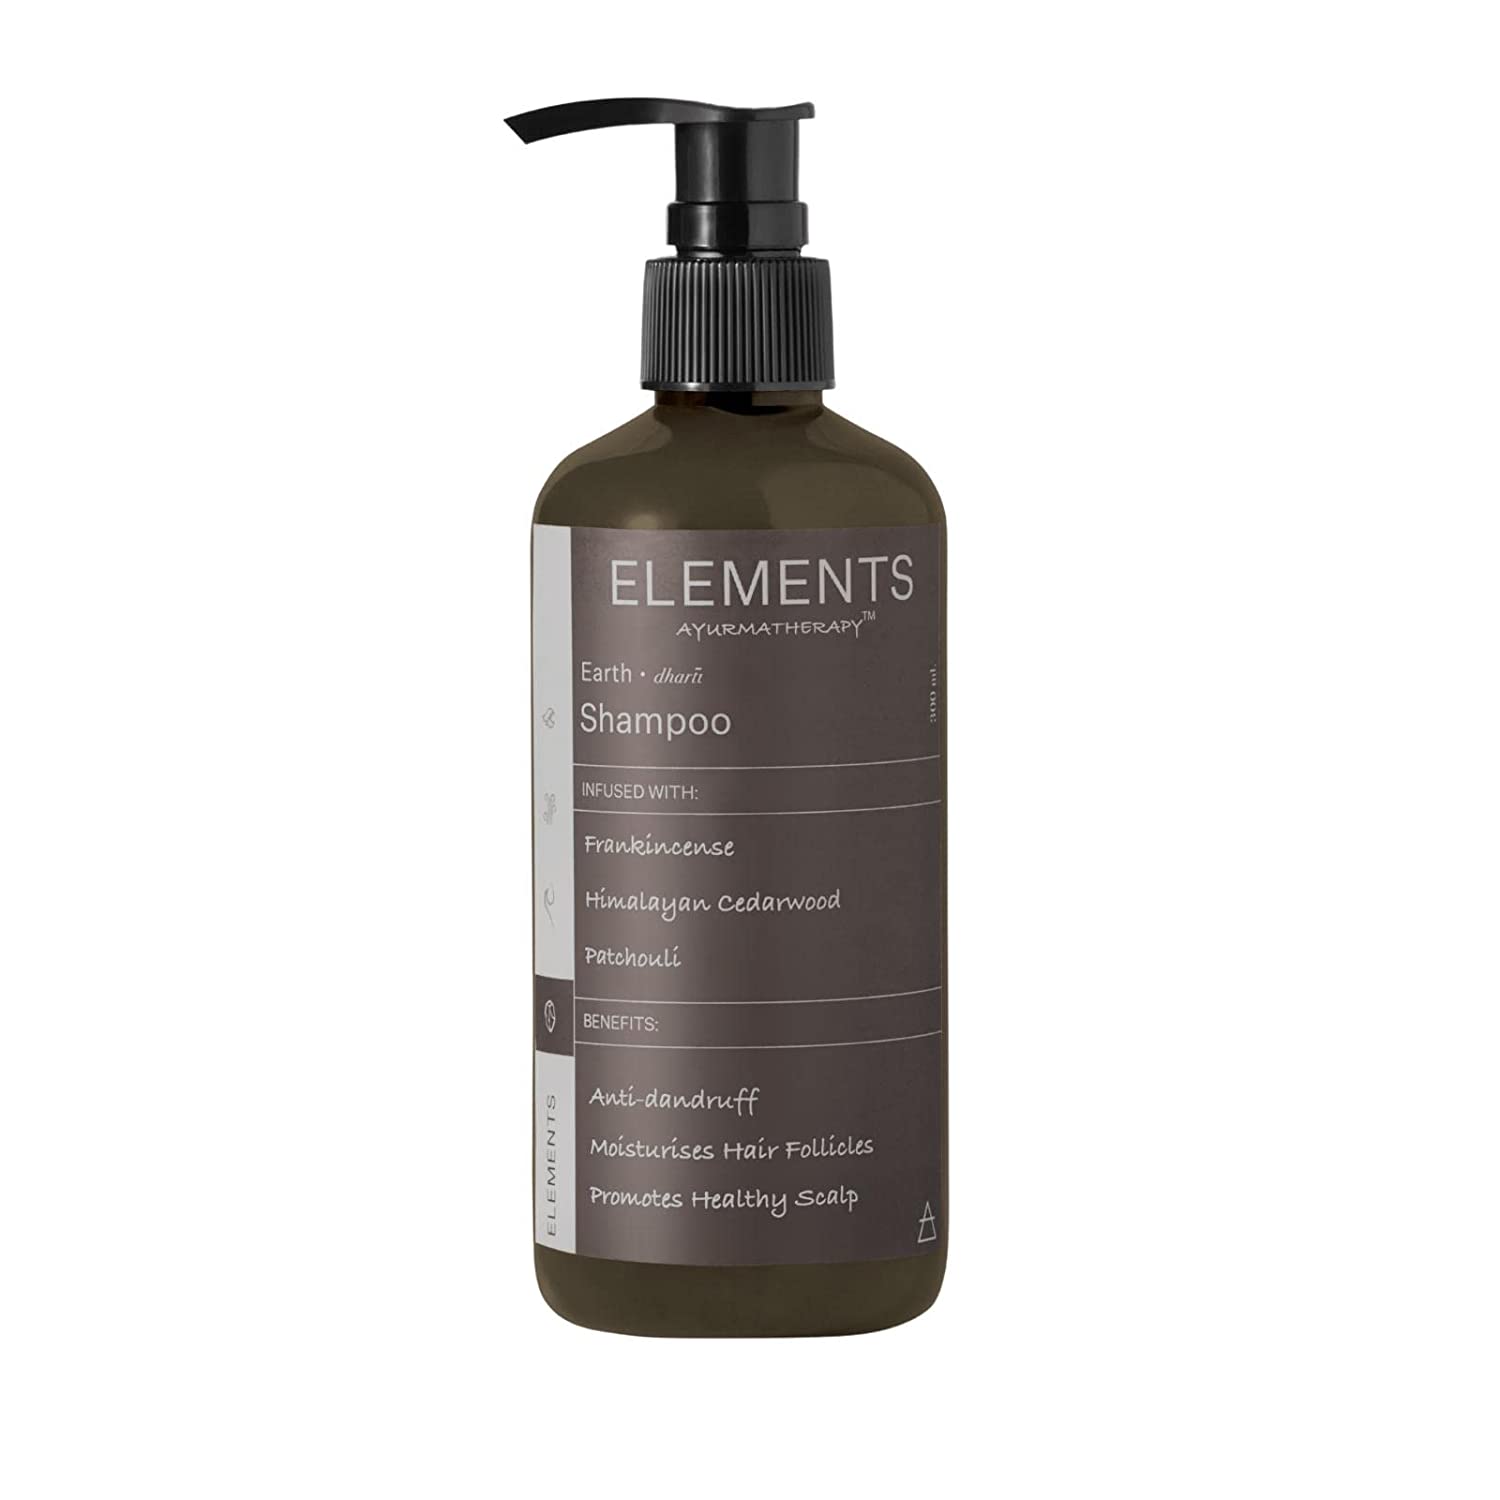 Elements Ayurvedic Shampoo